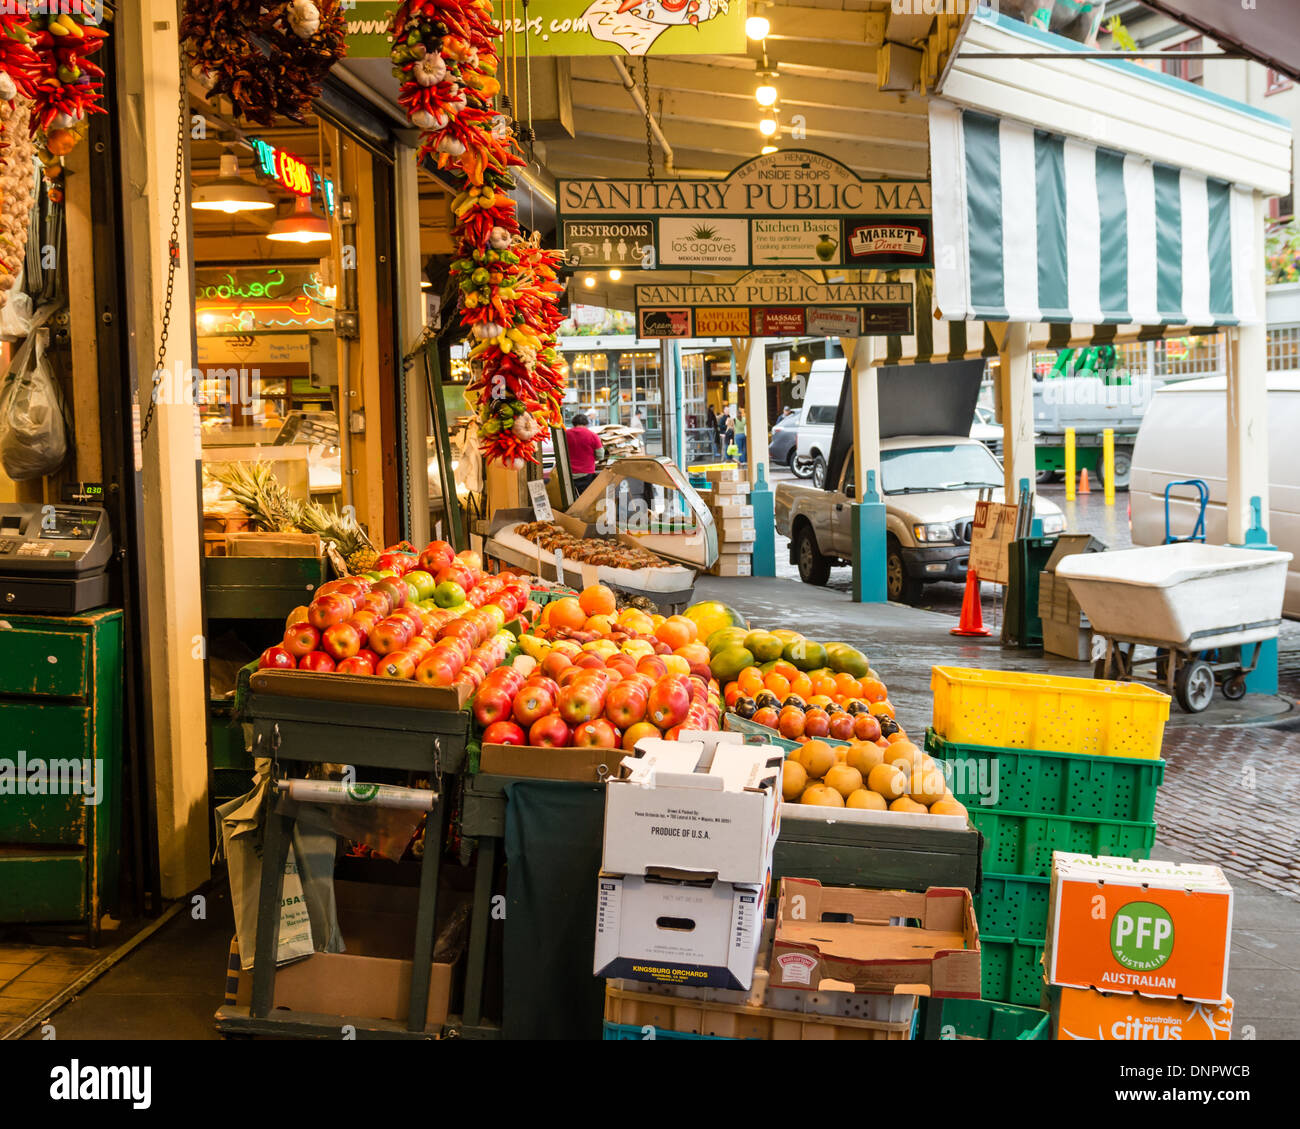 Produce vendor's market stall at the Sanitary Public Market Pike Place Market Seattle, Washington, USA Stock Photo